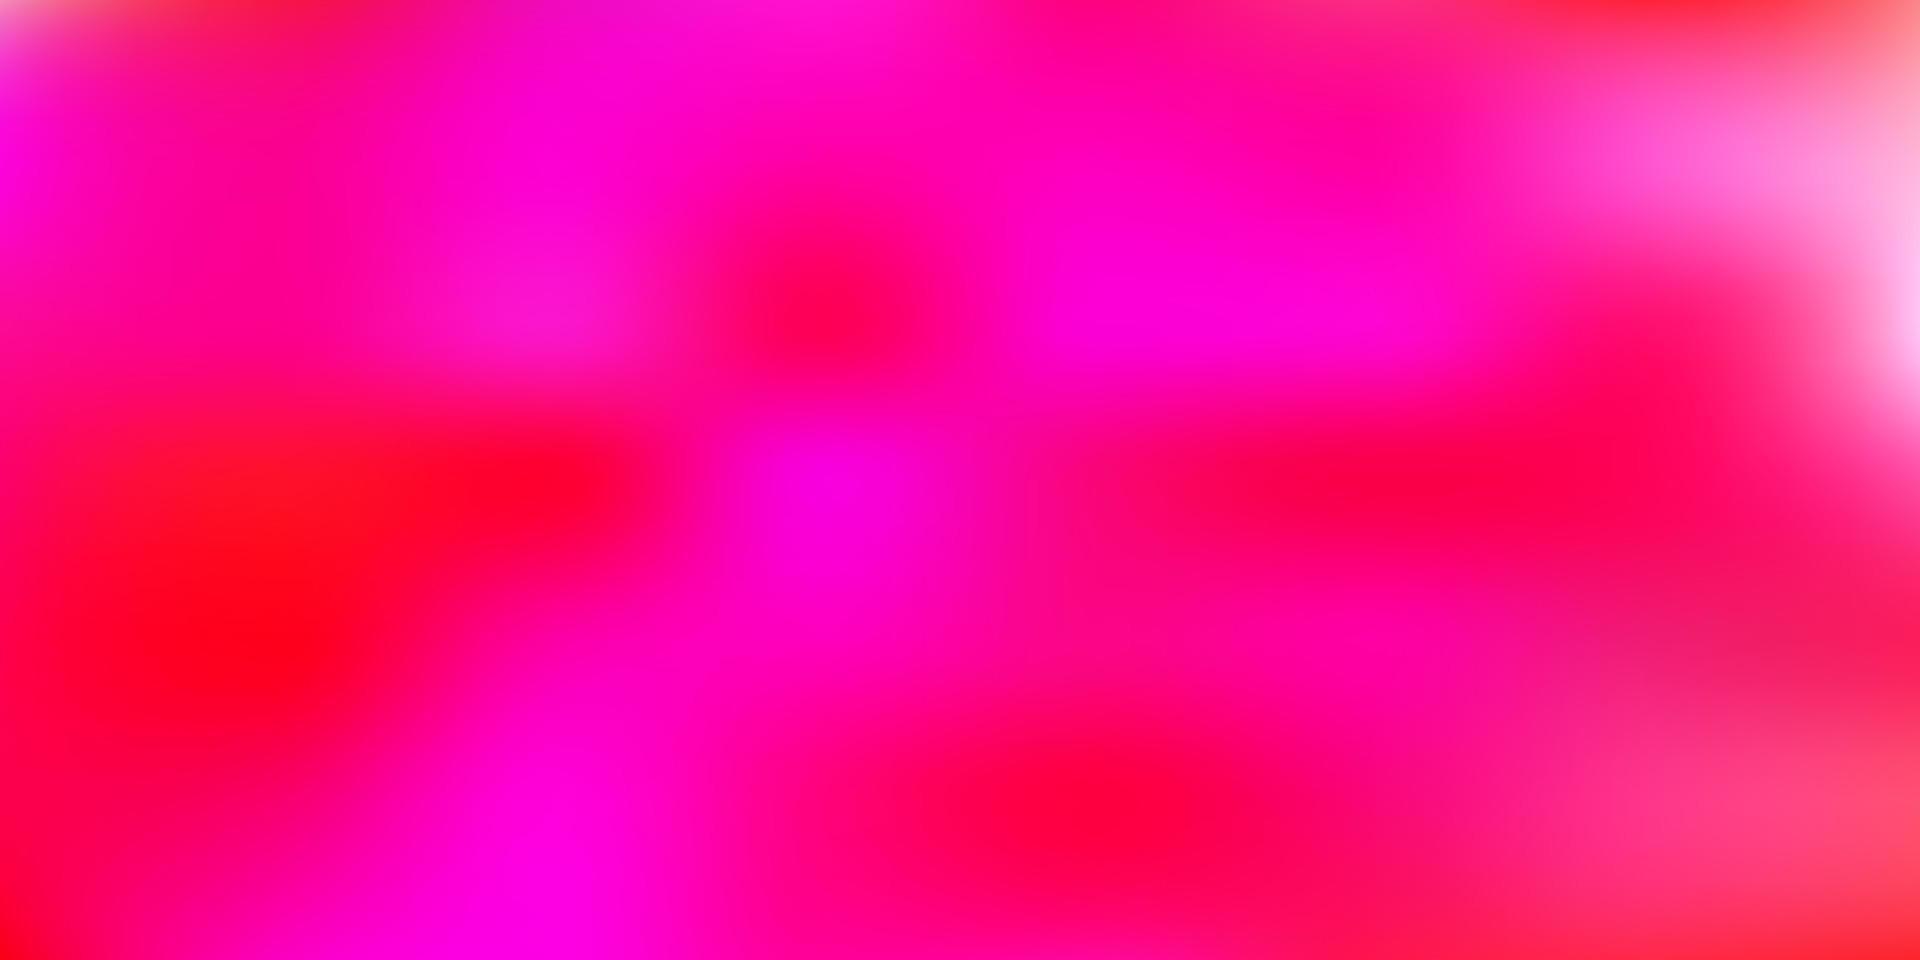 Light pink vector blurred background.